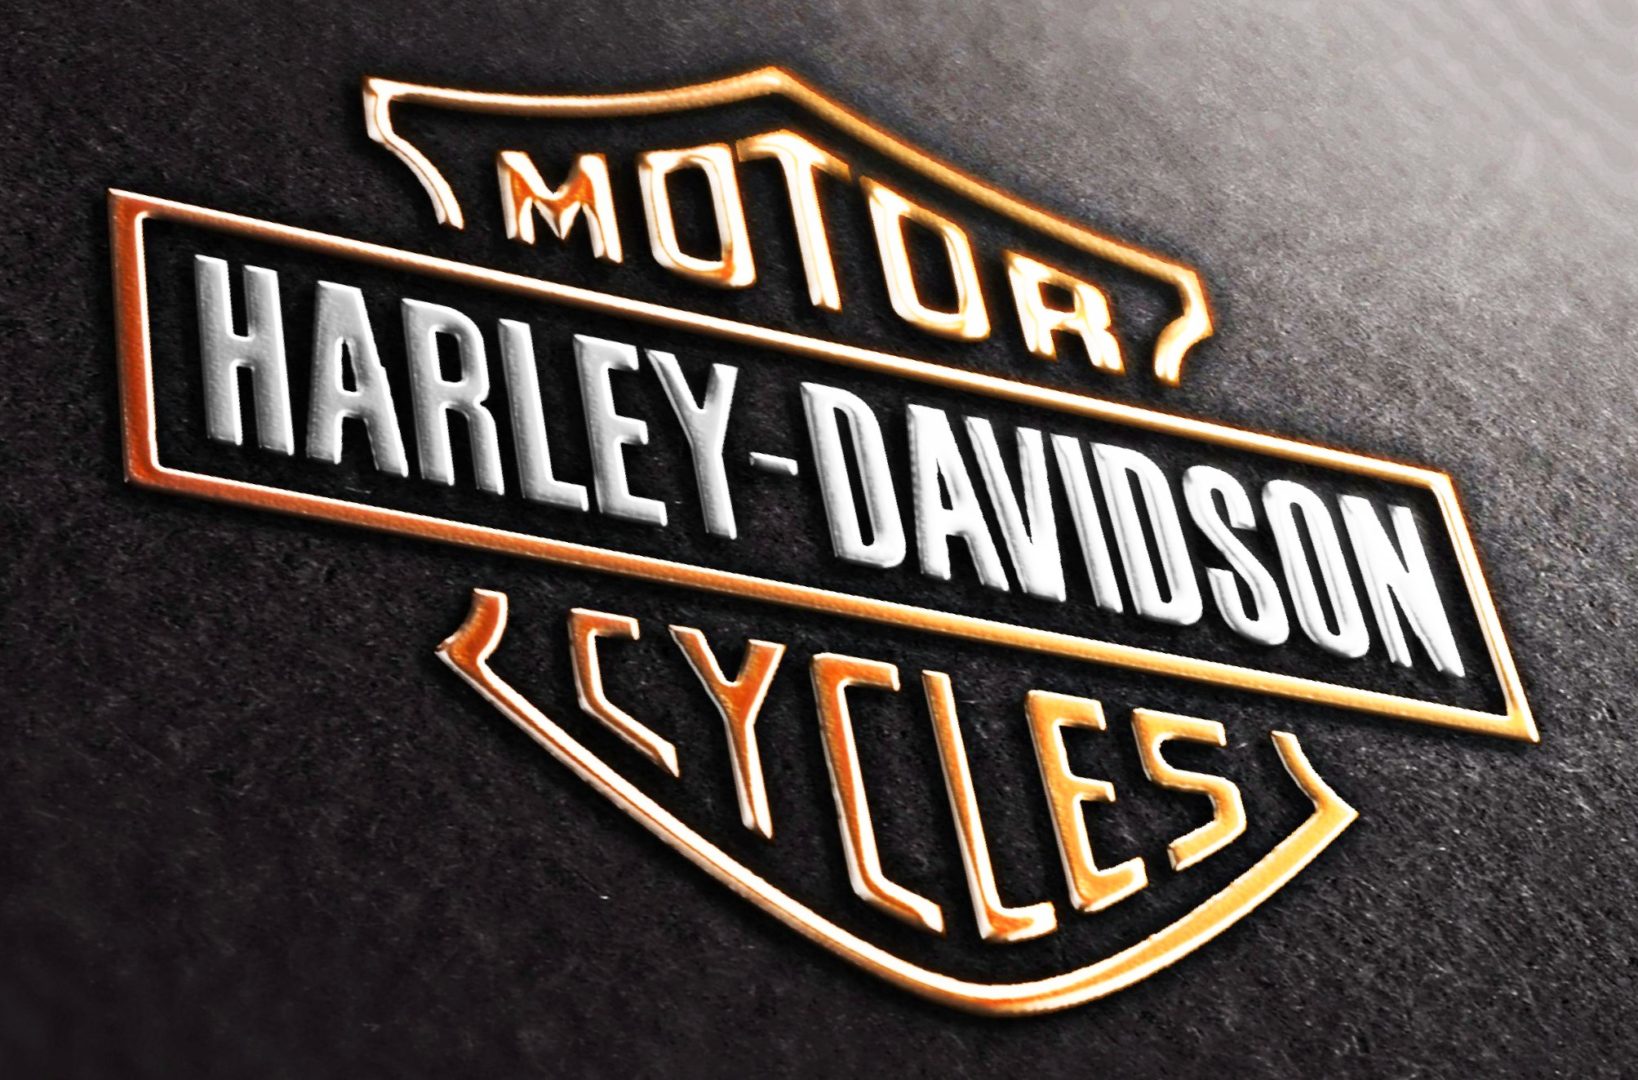 Harley-Davidson motorcycle logo history and Meaning, bike emblem